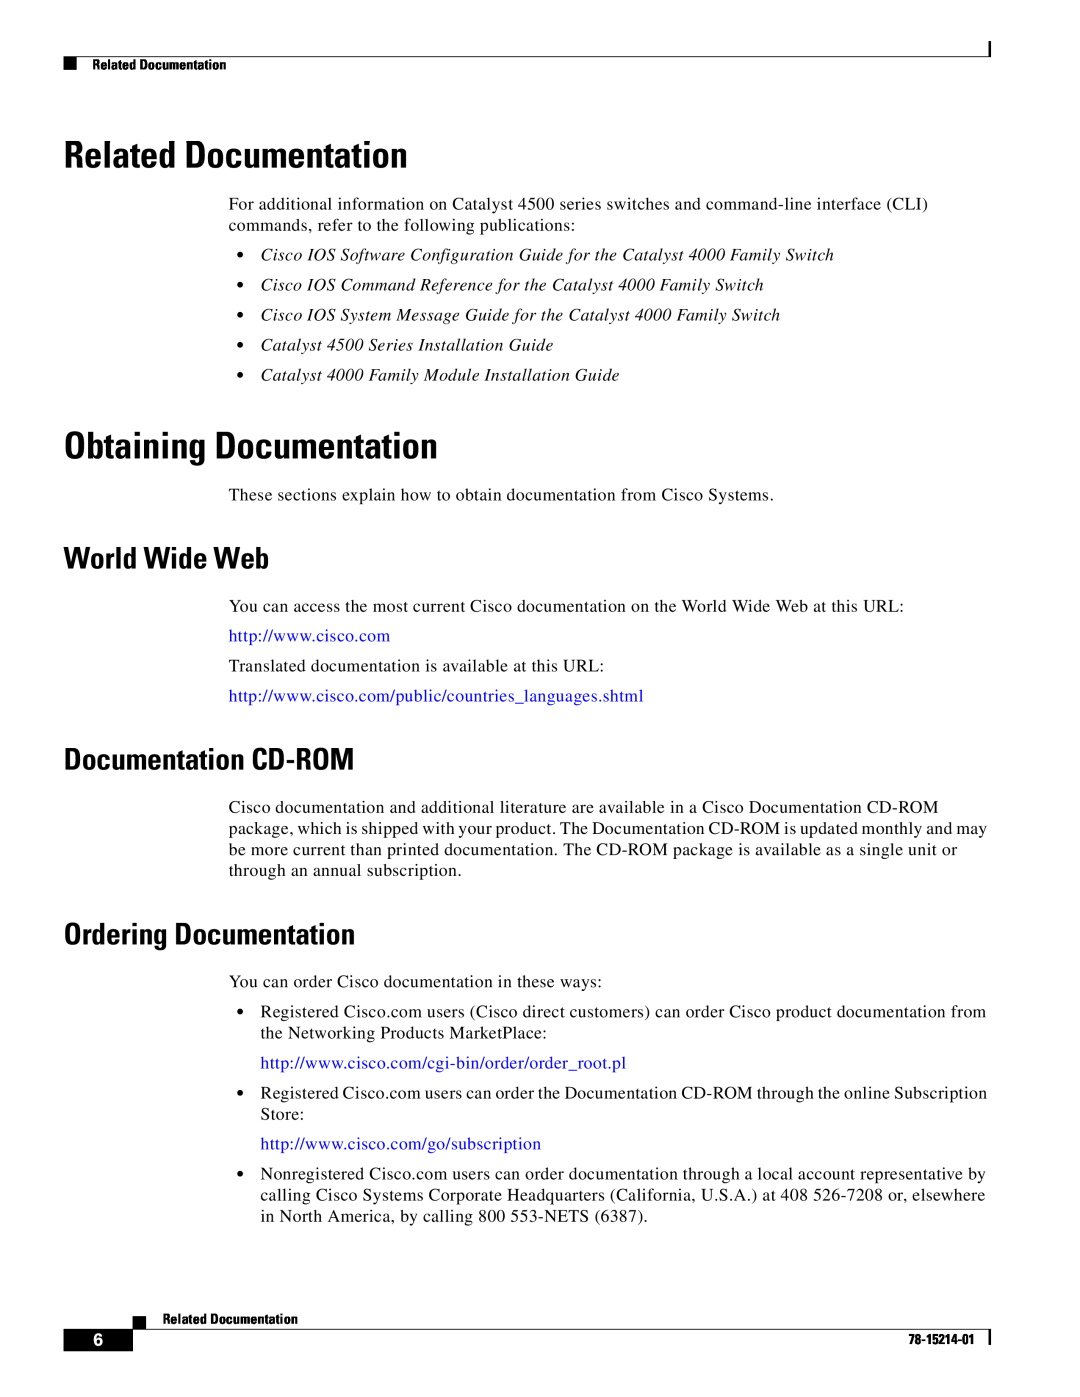 Cisco Systems WS-F4531 manual Related Documentation, Obtaining Documentation, World Wide Web, Documentation CD-ROM 